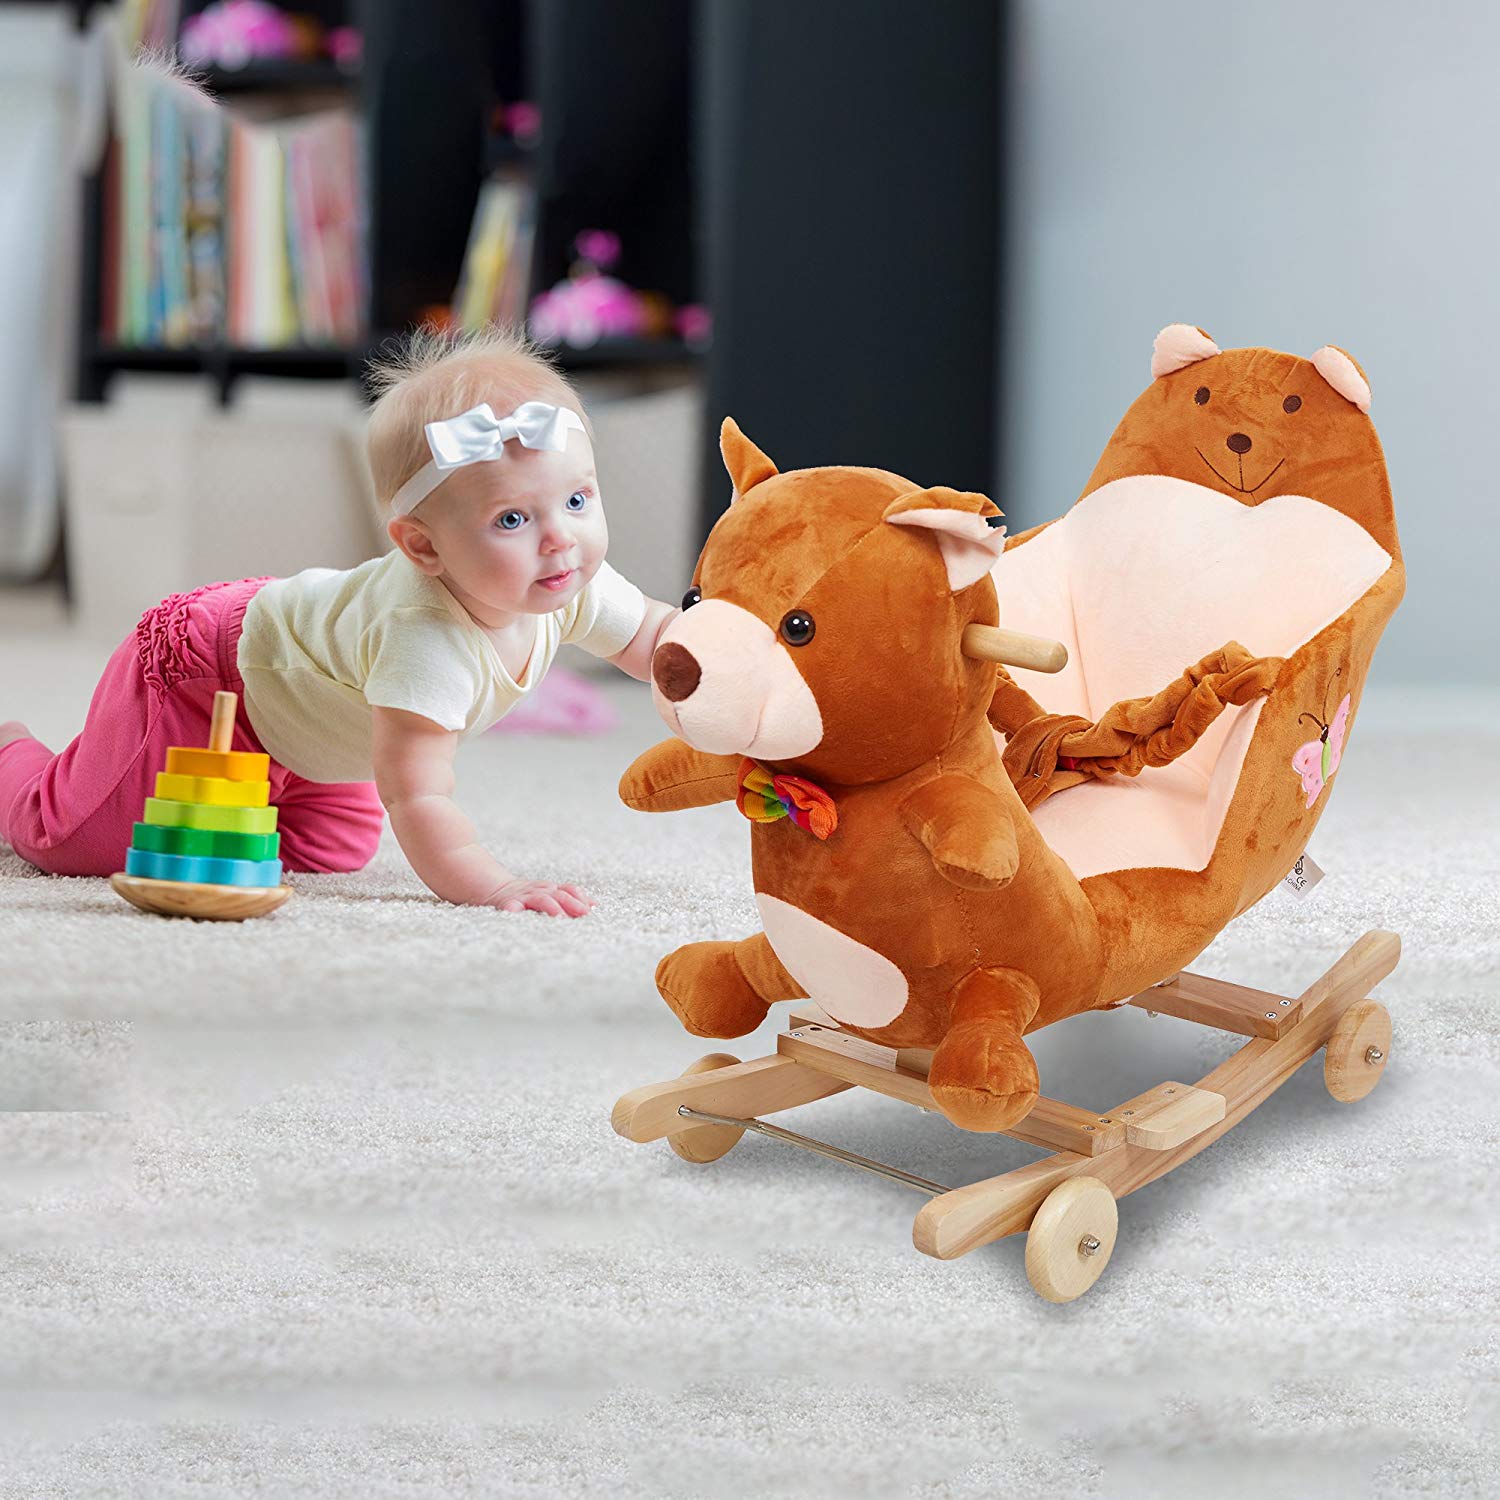 soft stuffed plush rocking animal chair for baby's nursery room decor